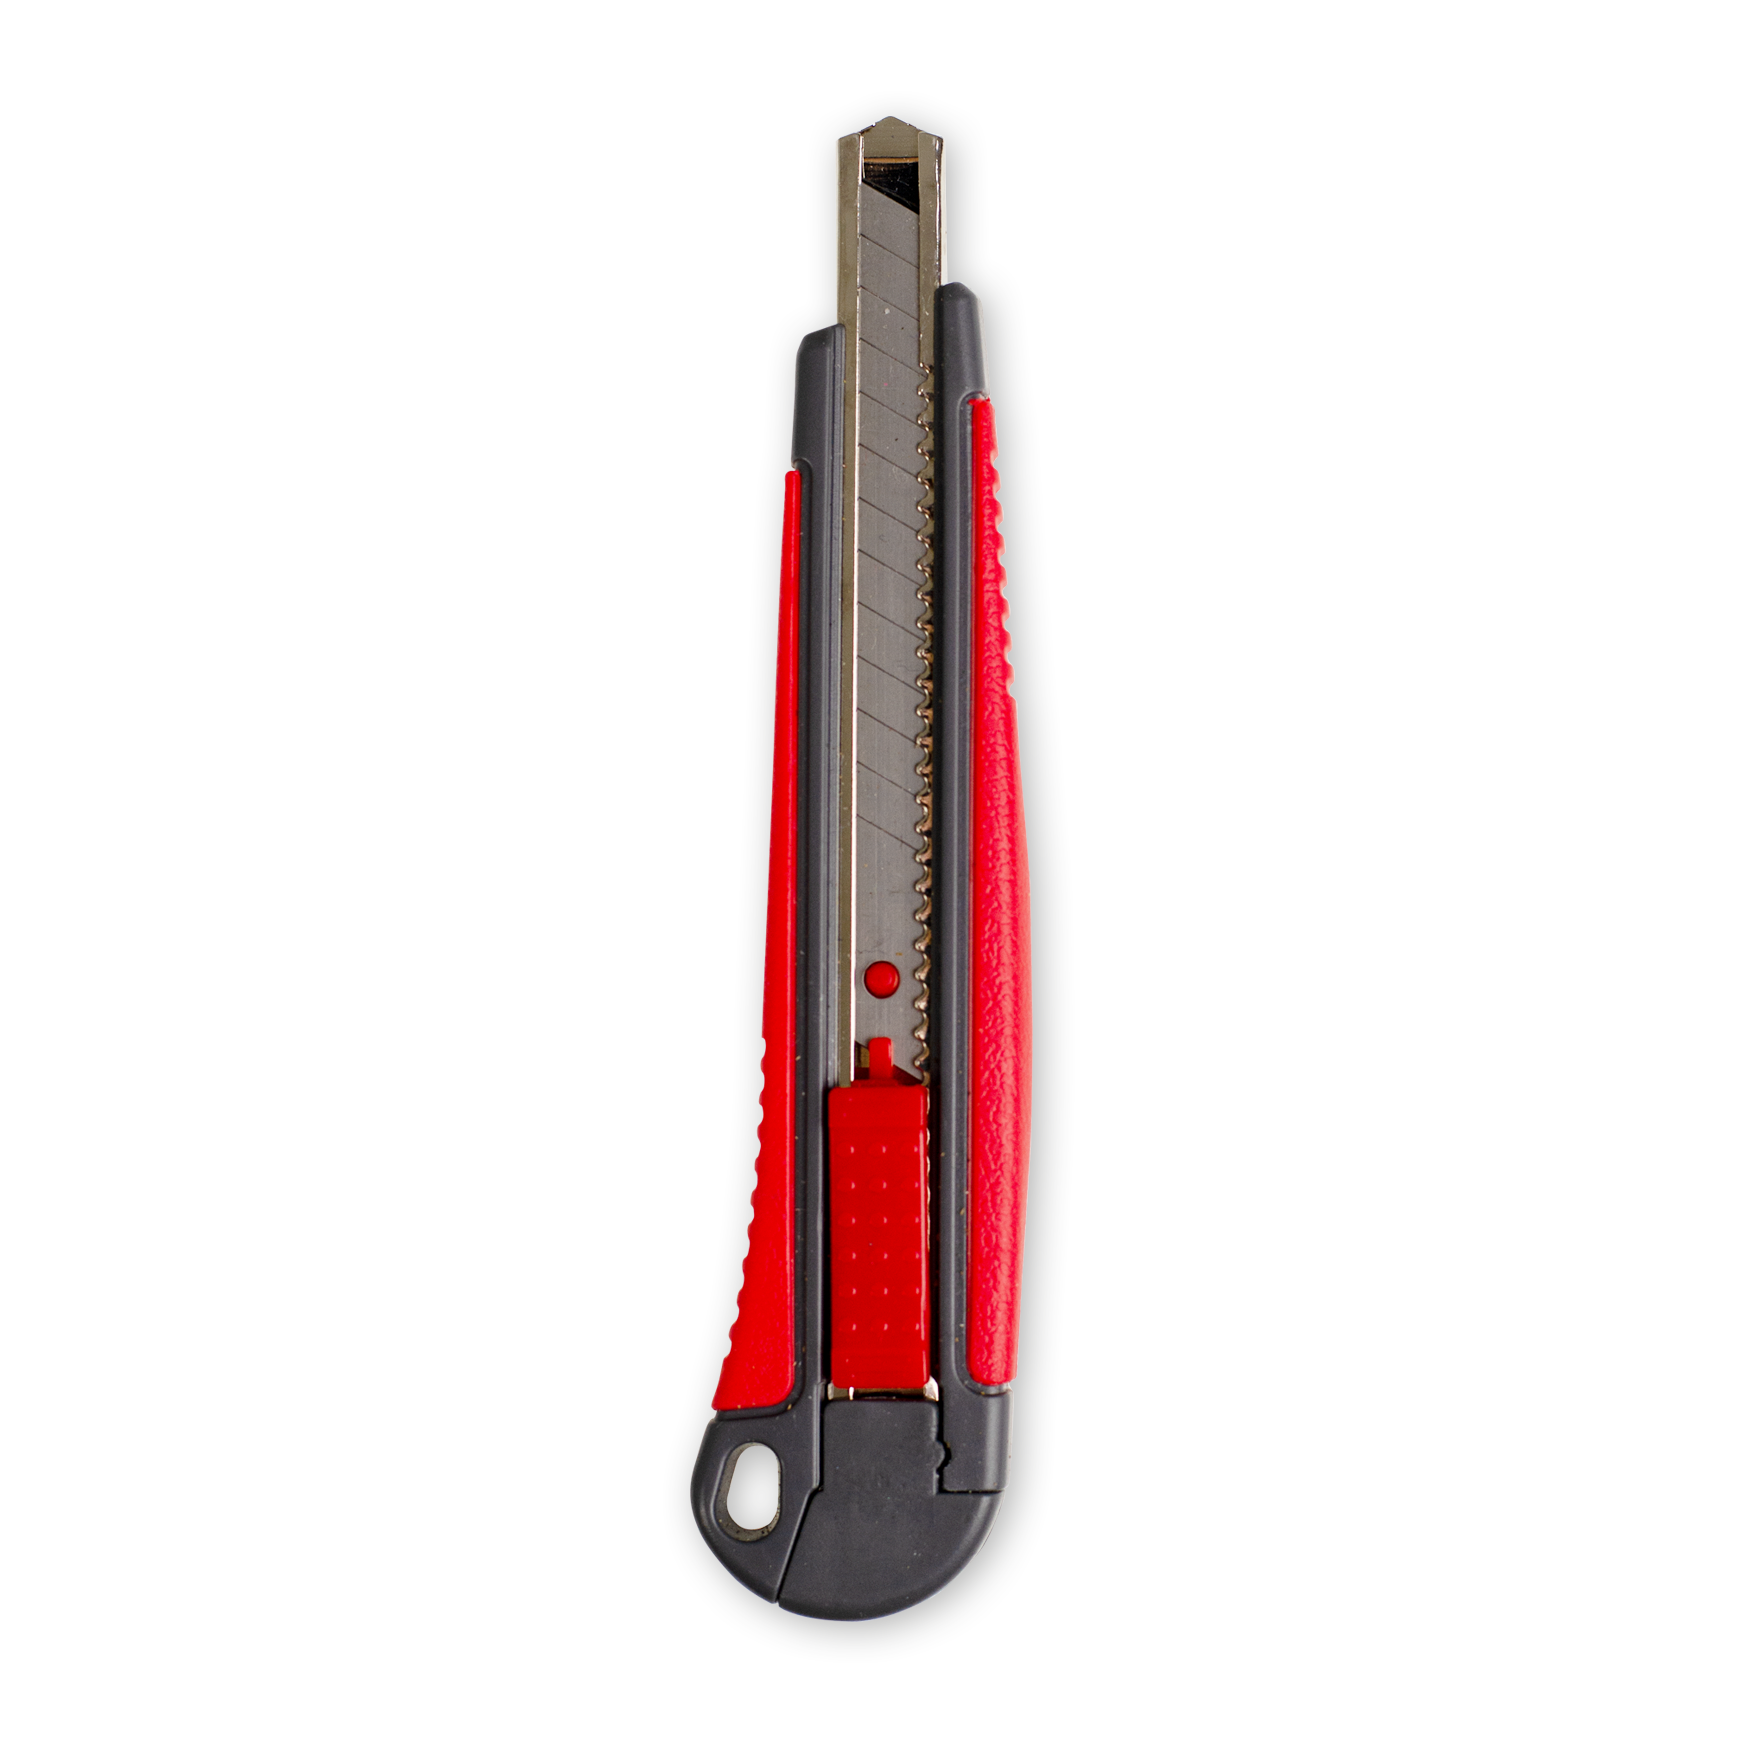 Kovový ulamovací nůž Kores 9 mm, softgrip, šedočervený